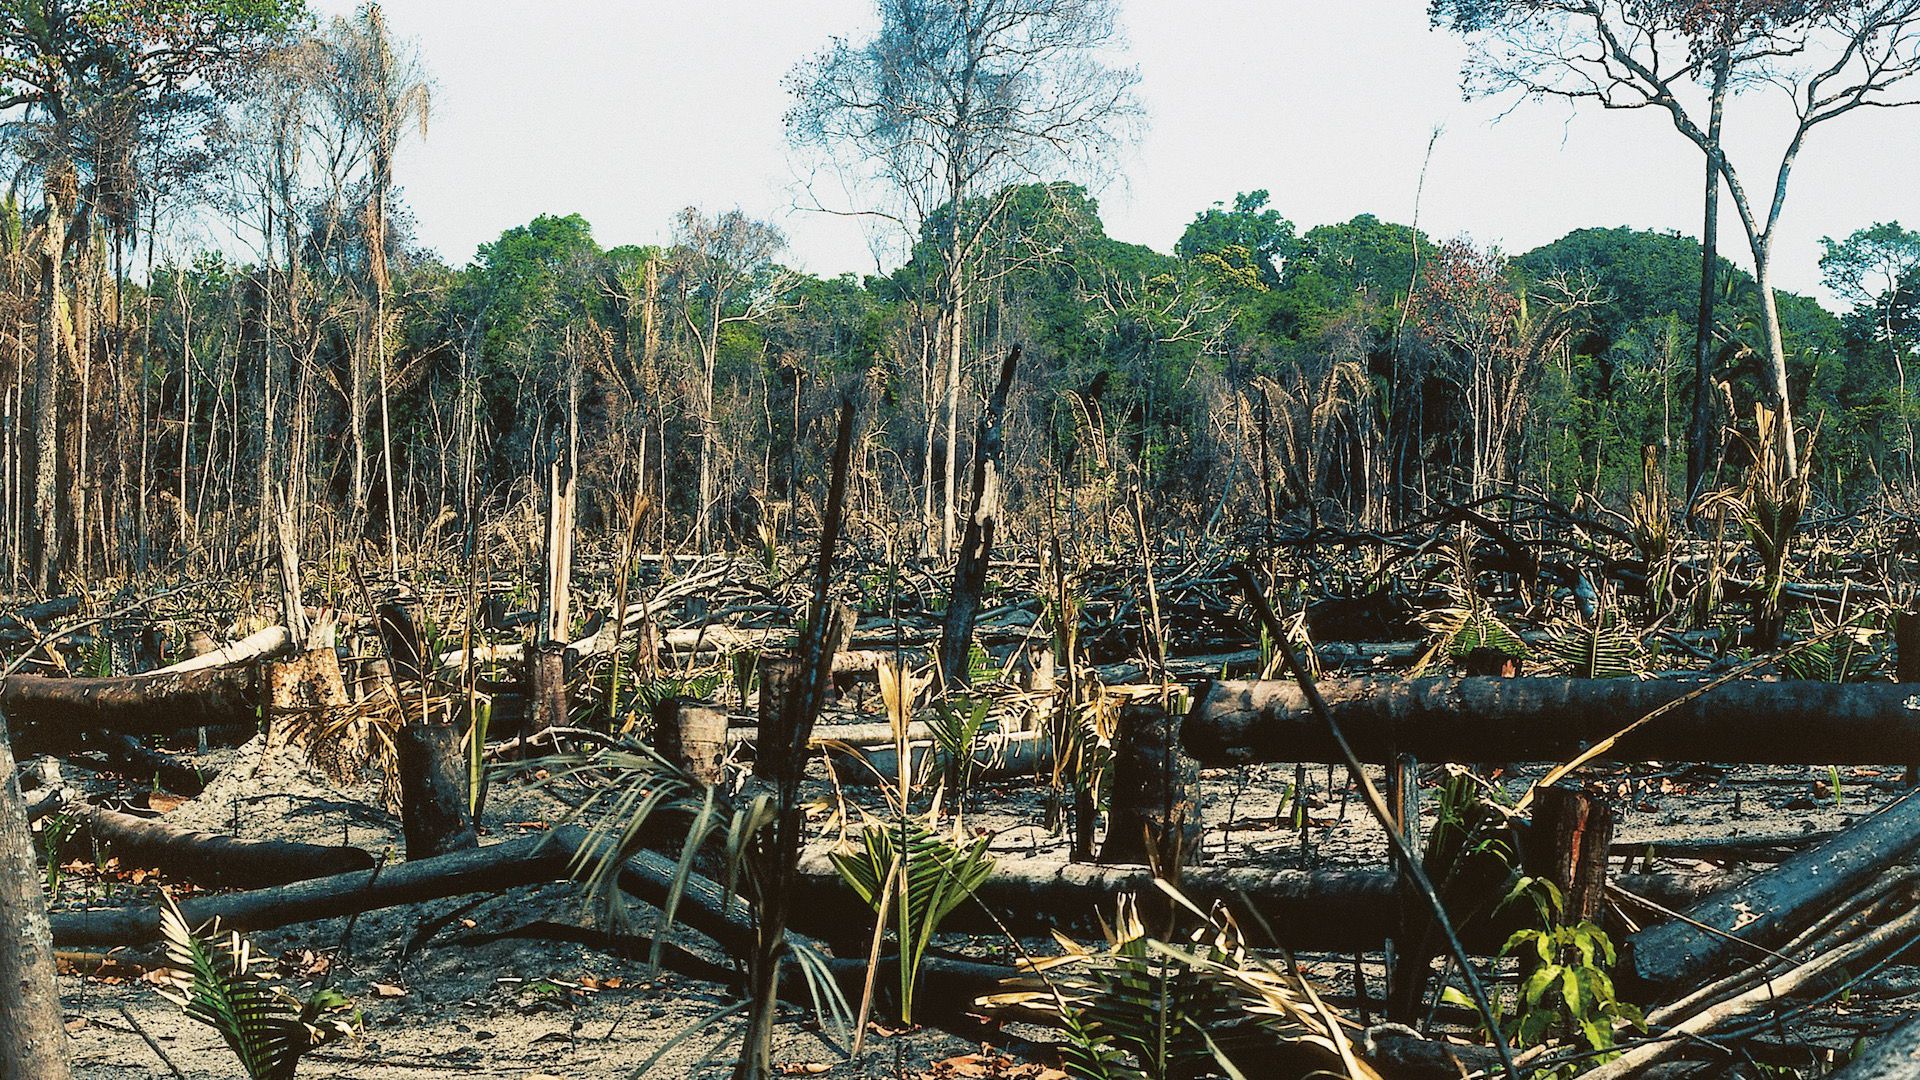 tropical rainforest deforestation case study